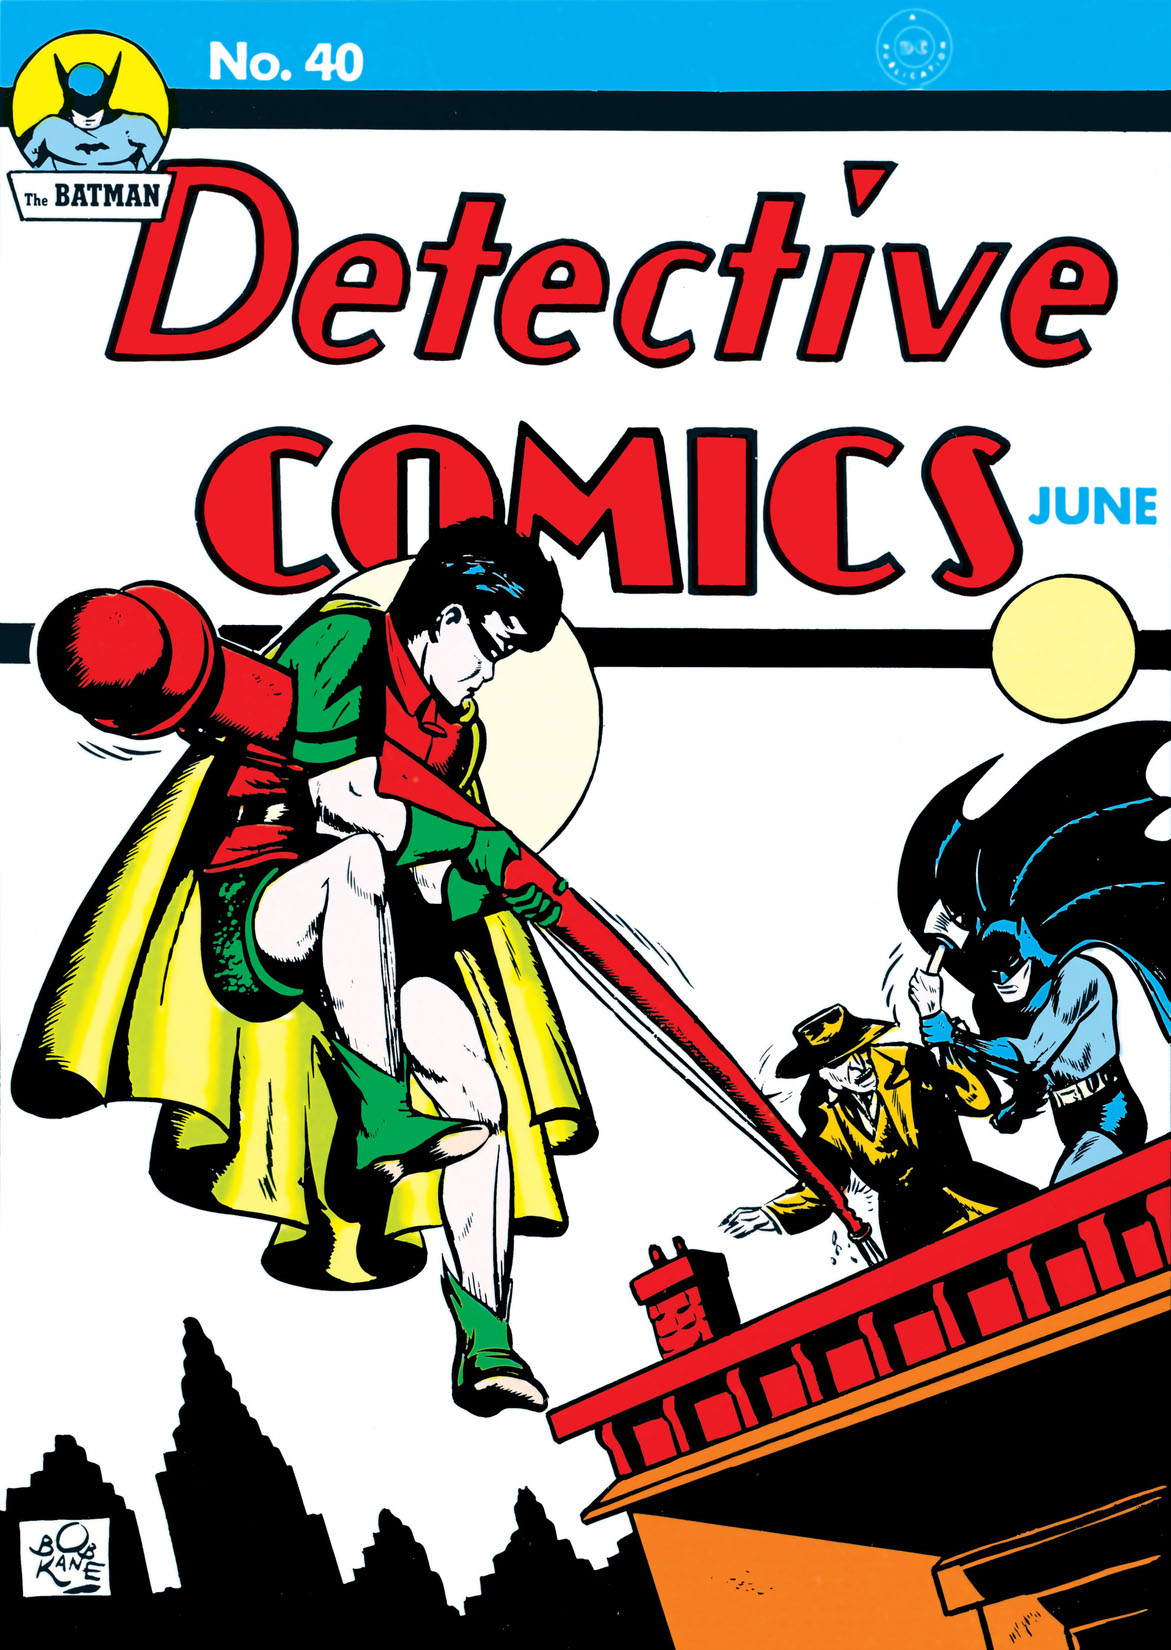 Detective Comics (1937-) #40 preview images